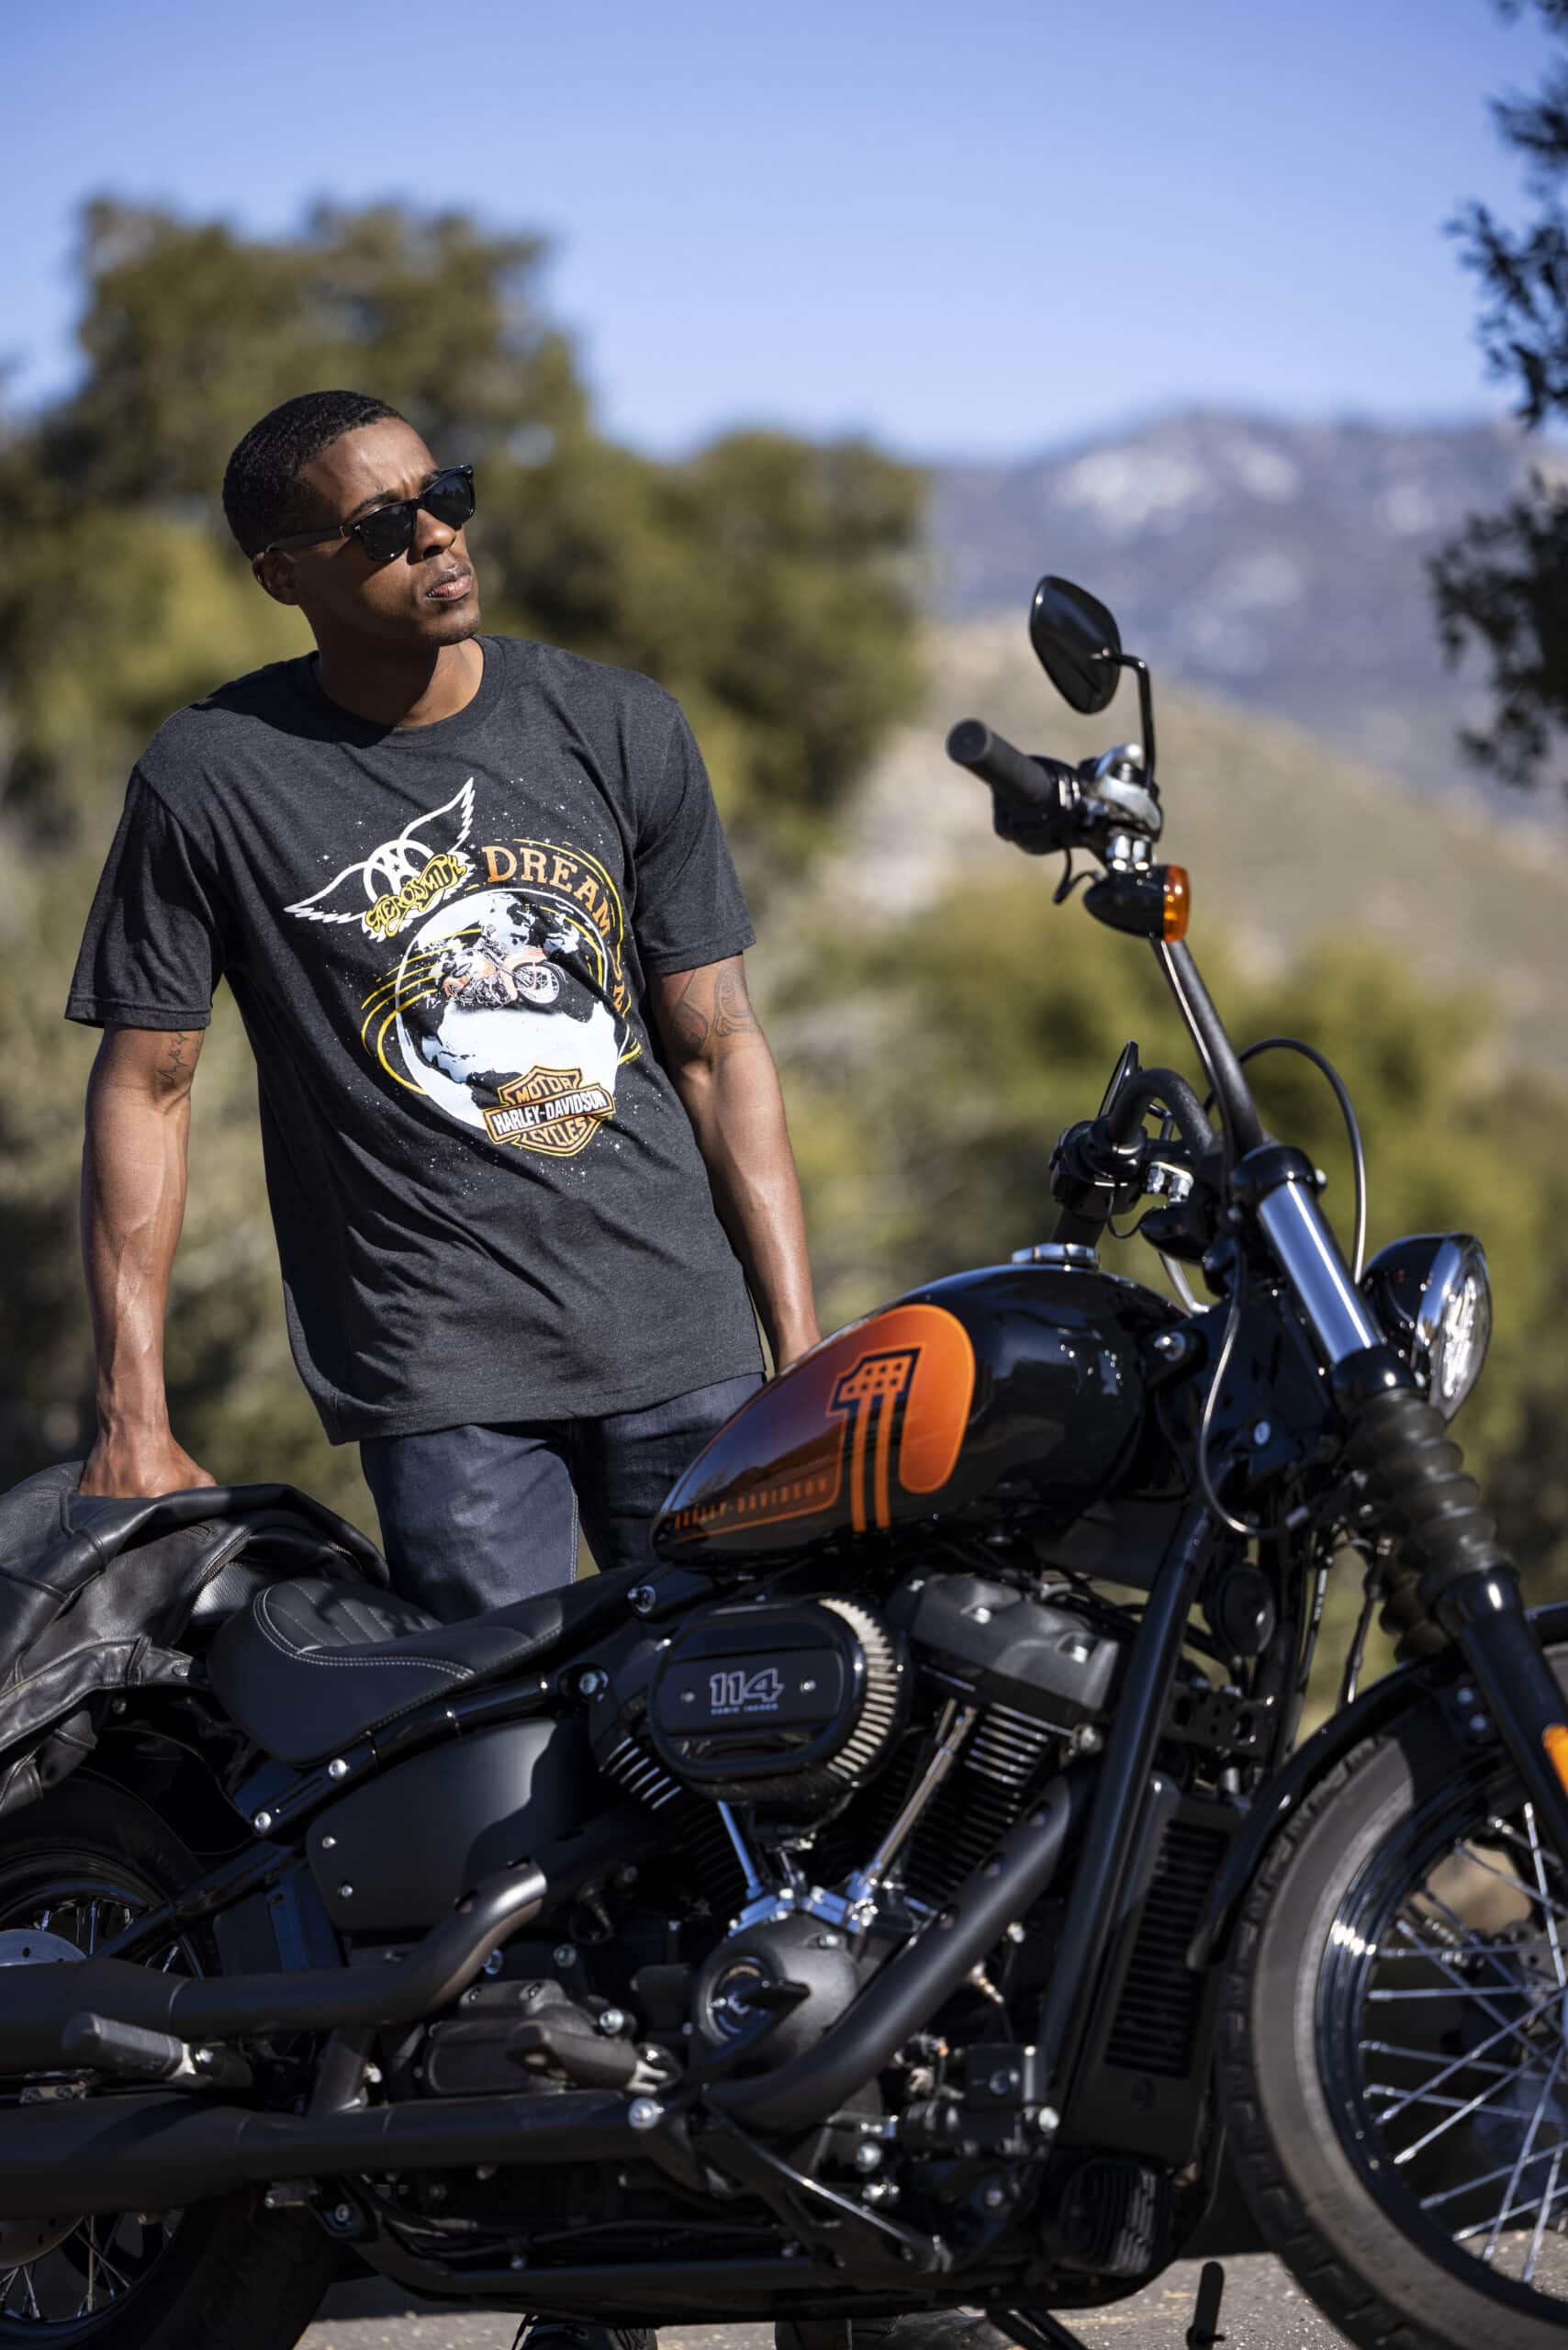 Harley Davidson And Aerosmith Launch Limited Edition Apparel